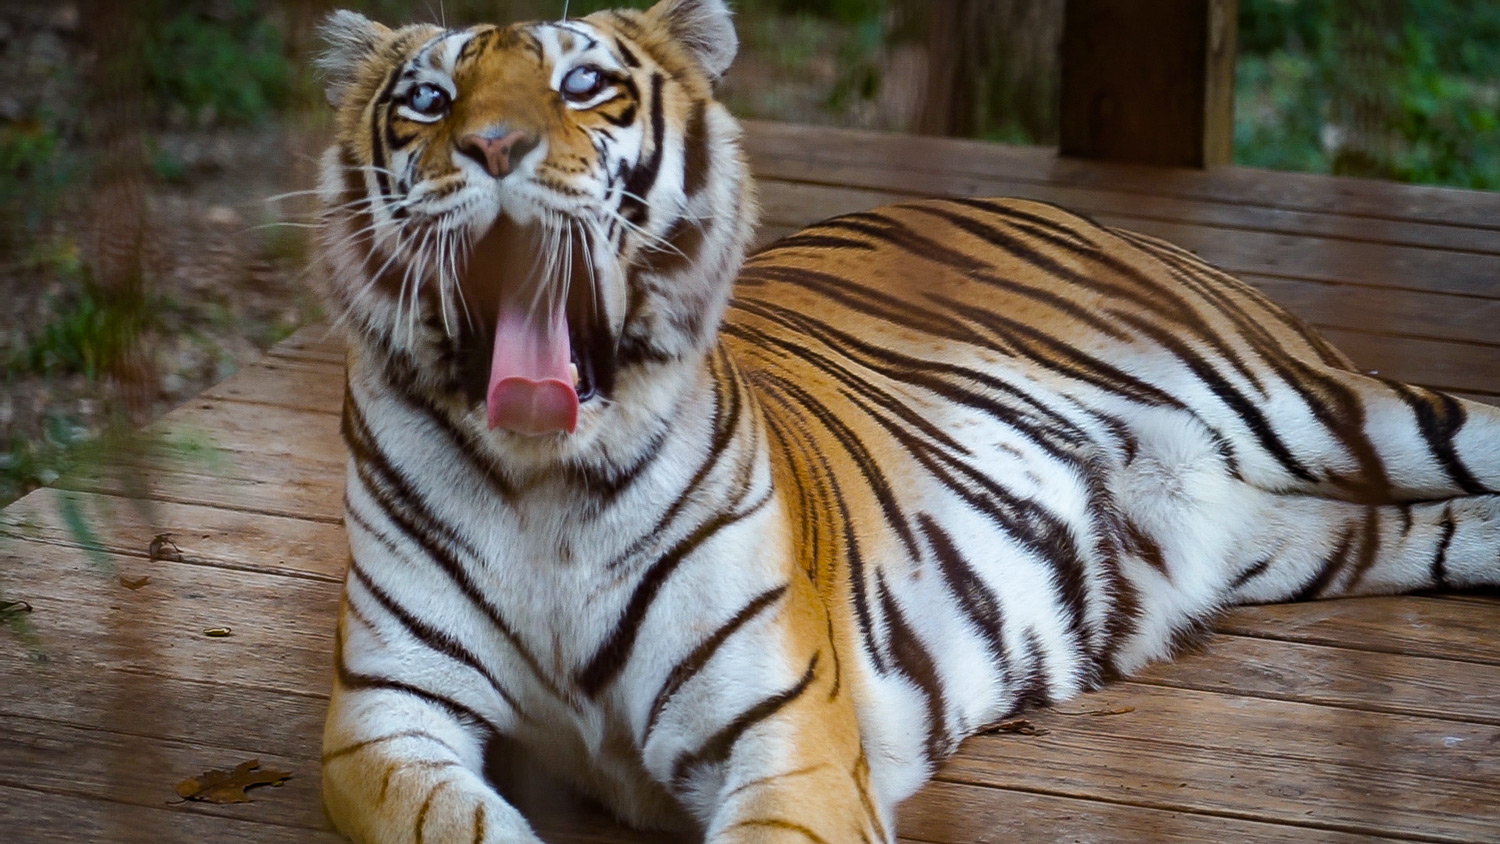 Travel vlog - Visiting a Tiger Sanctuary!